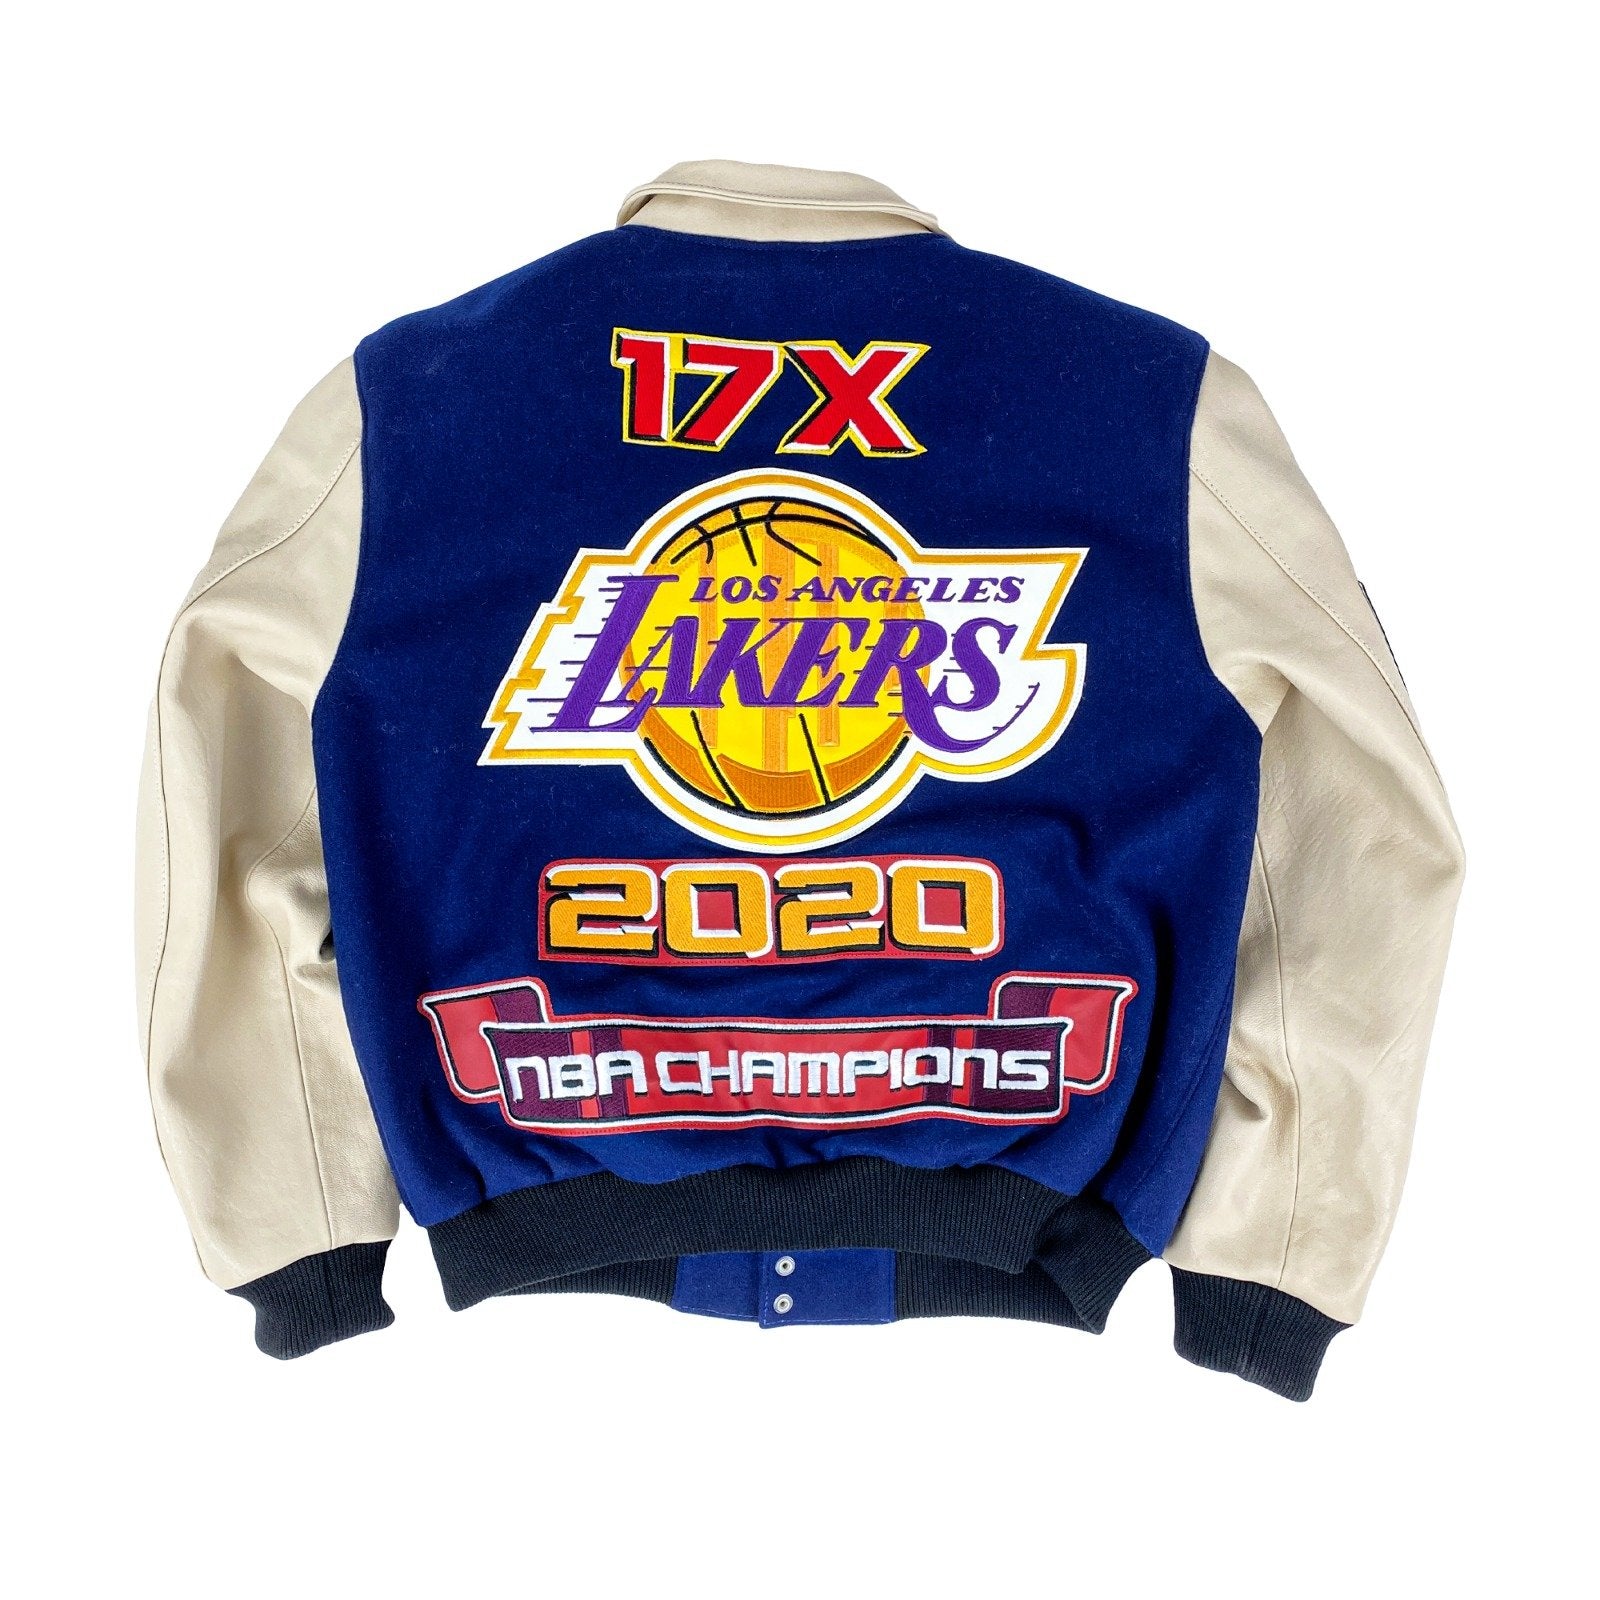 Shop Lakers Championship Jacket online